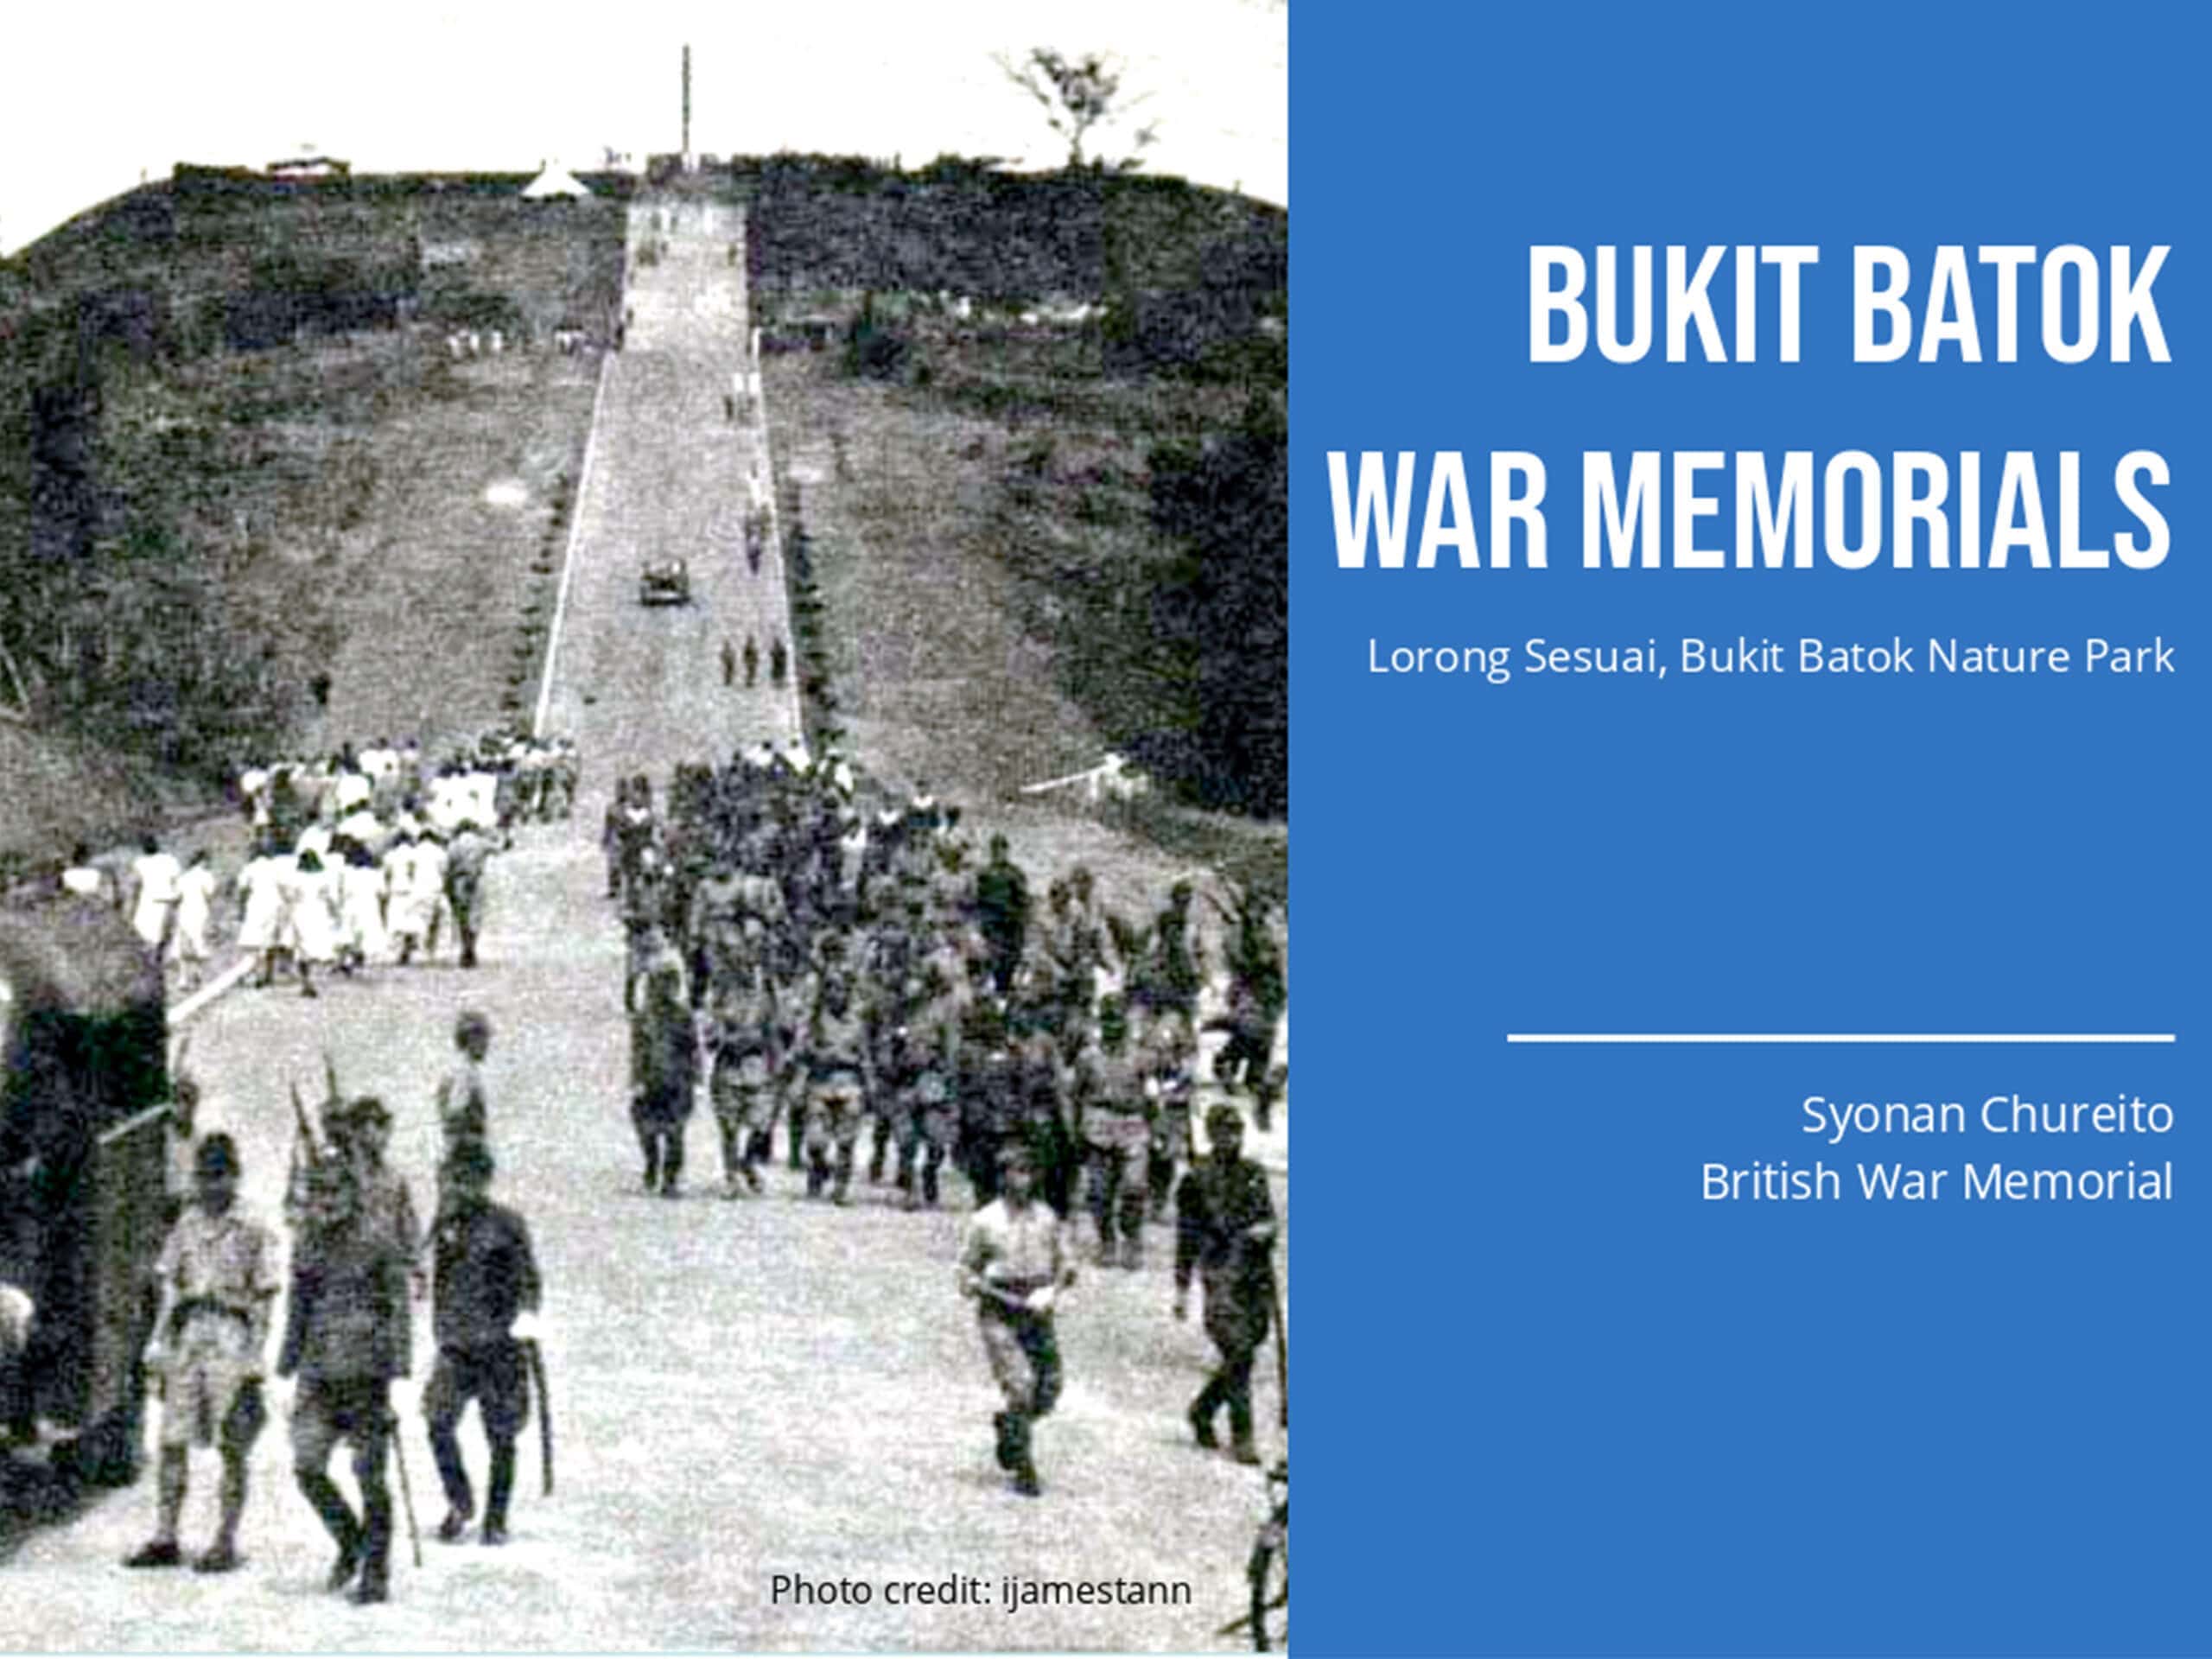 Bukit Batok War Memorials (main banner)